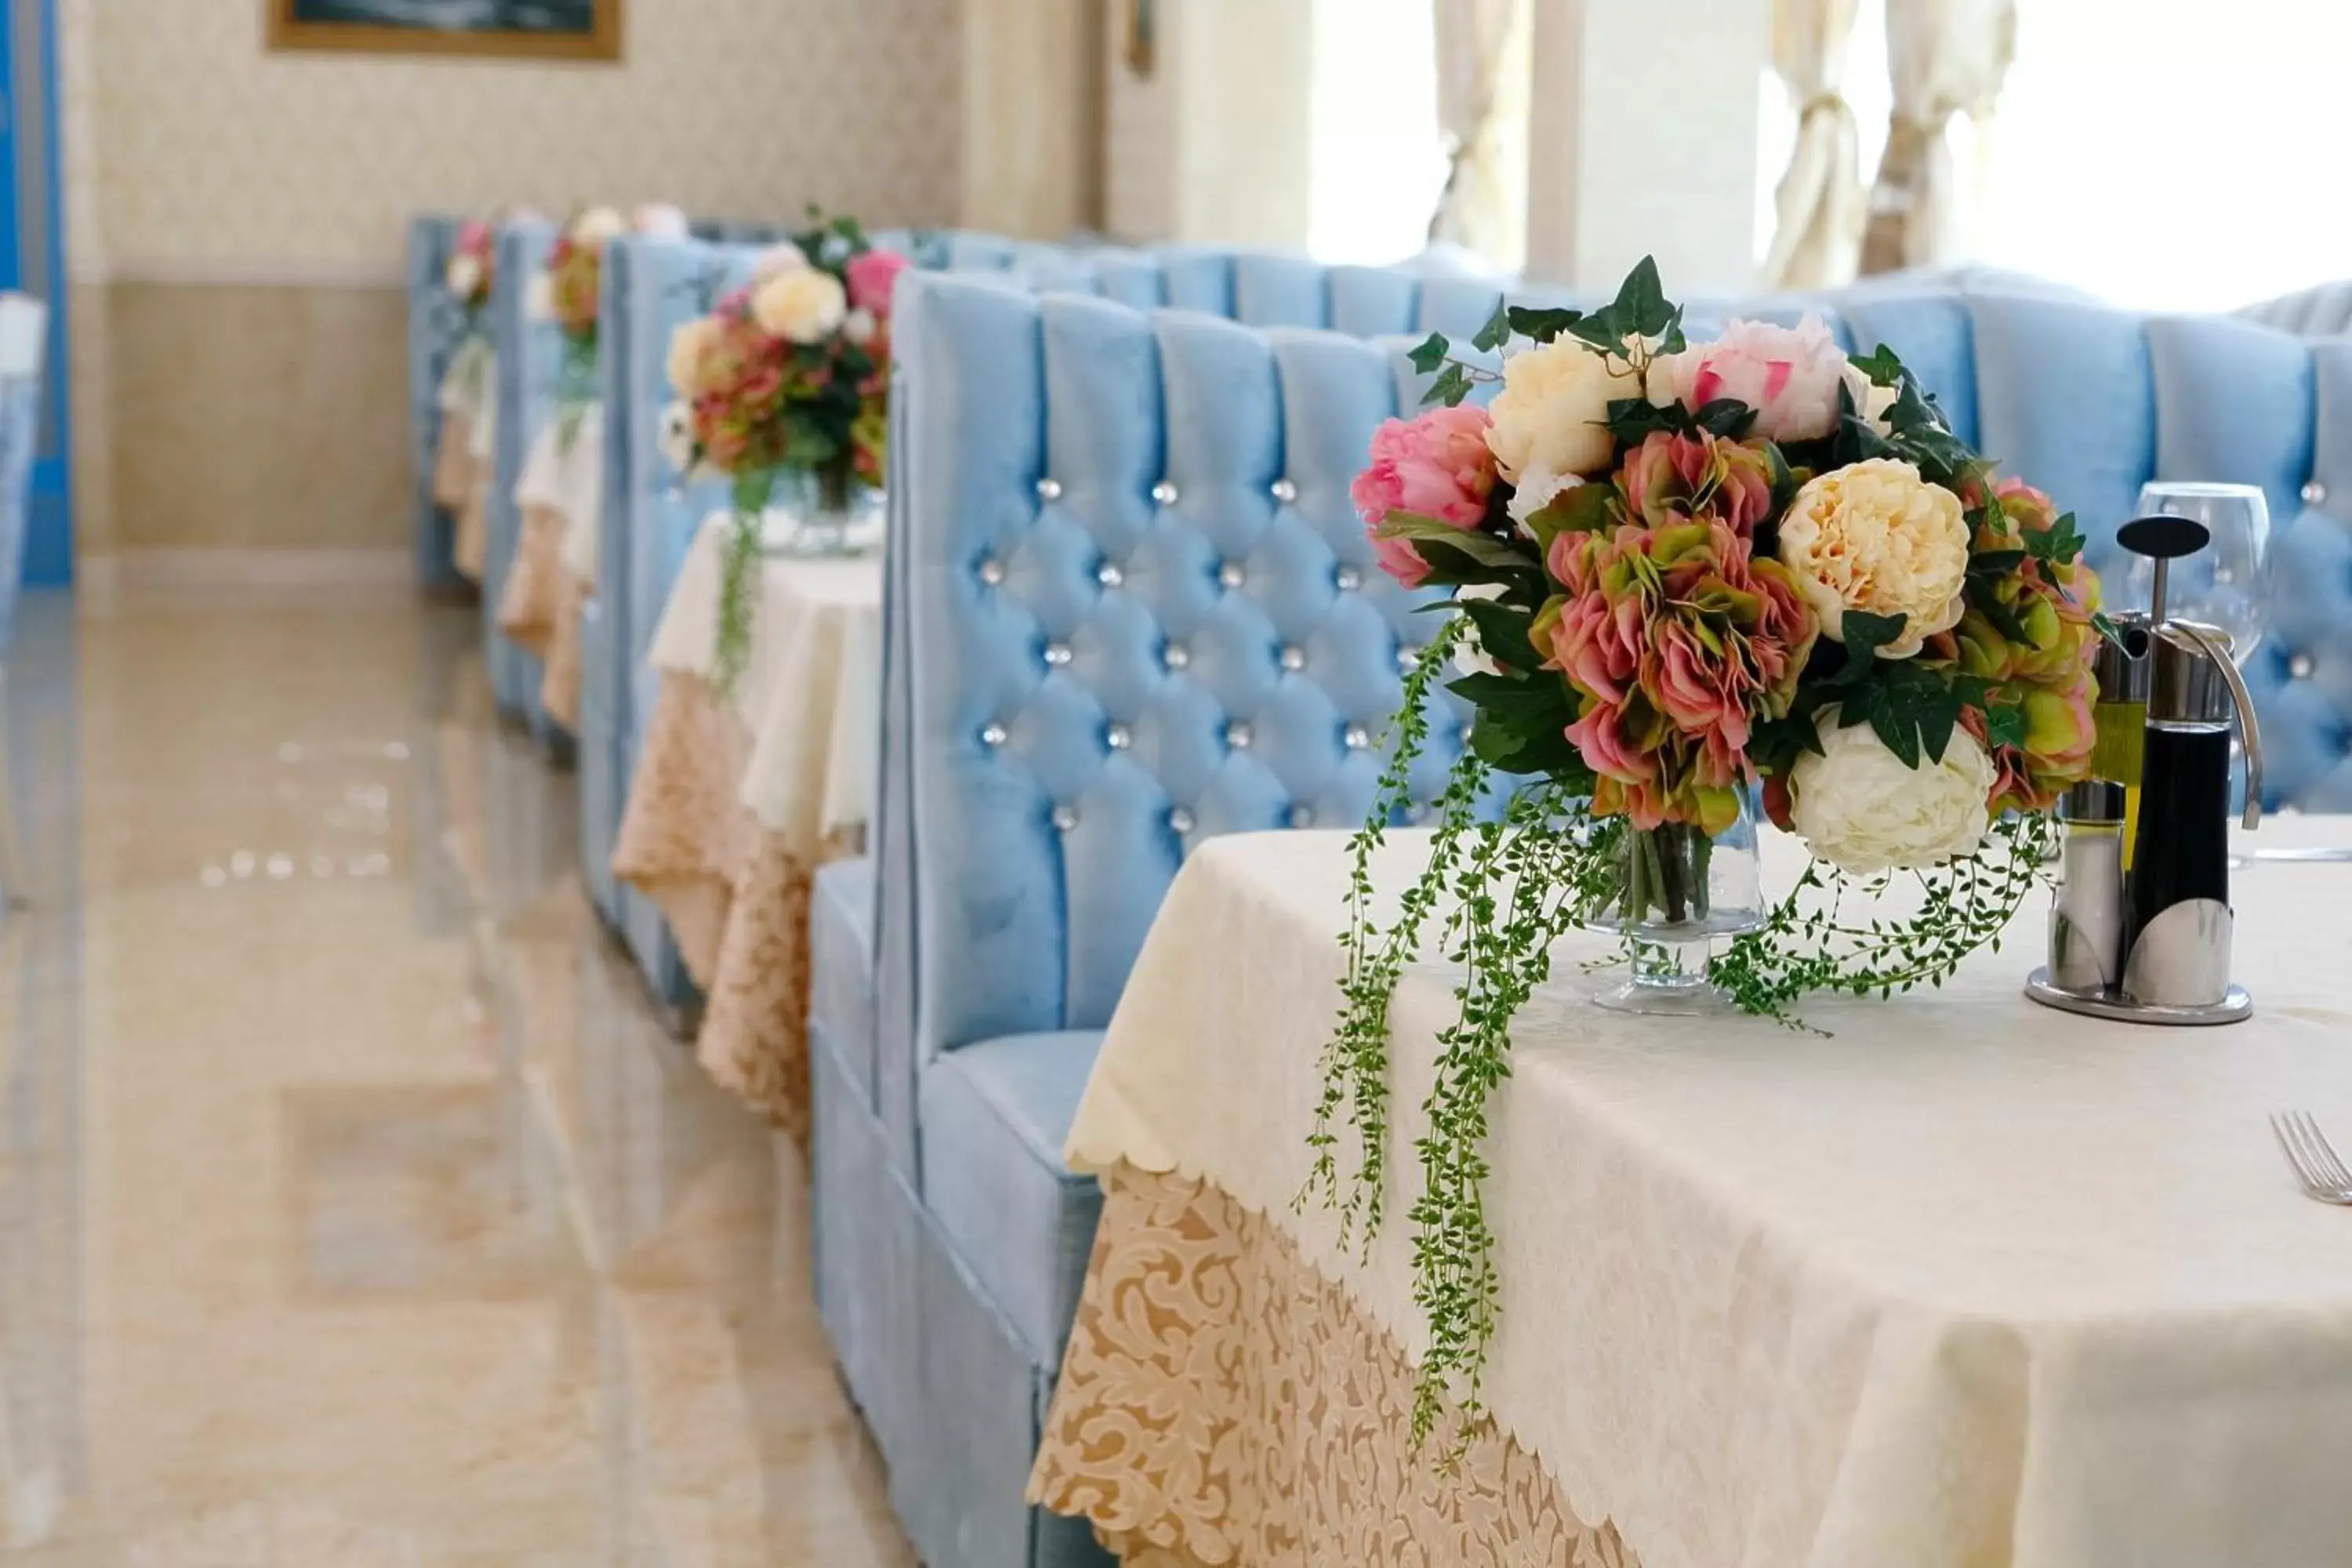 Restaurant/places to eat, Banquet Facilities in Hotel Montecito